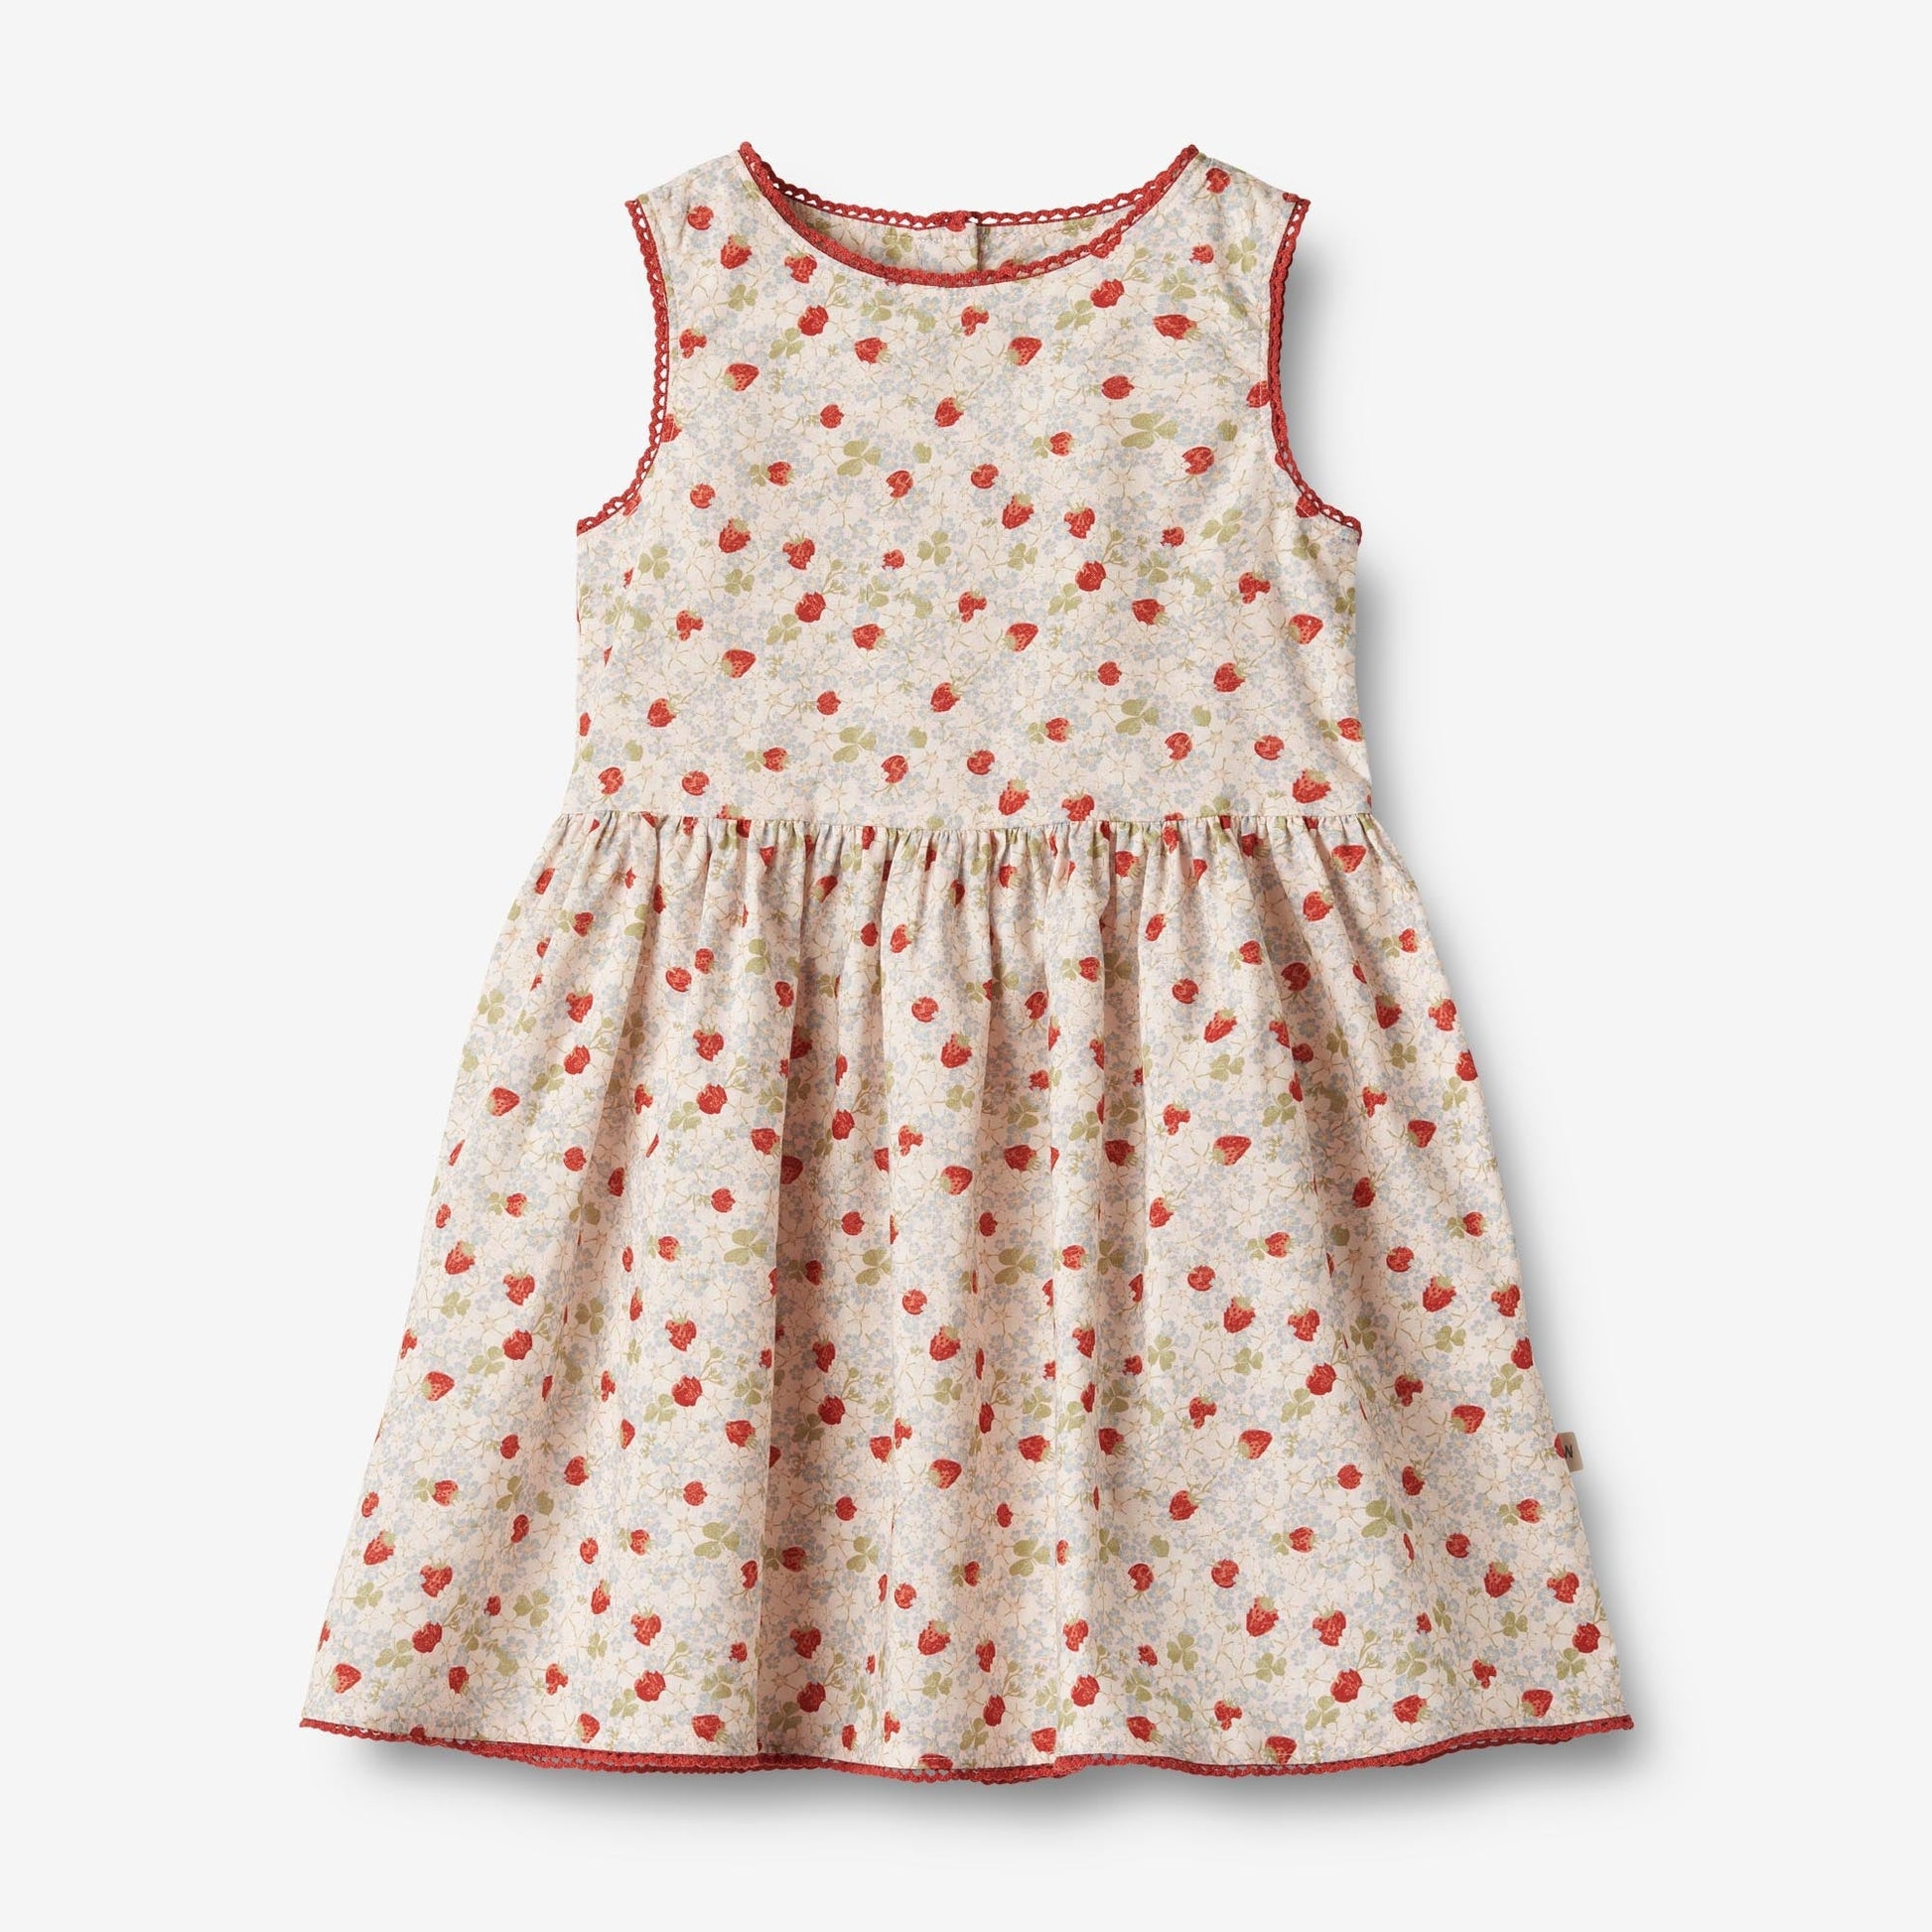 Wheat 'Thelma' Children's Lace Dress - Rose Strawberries